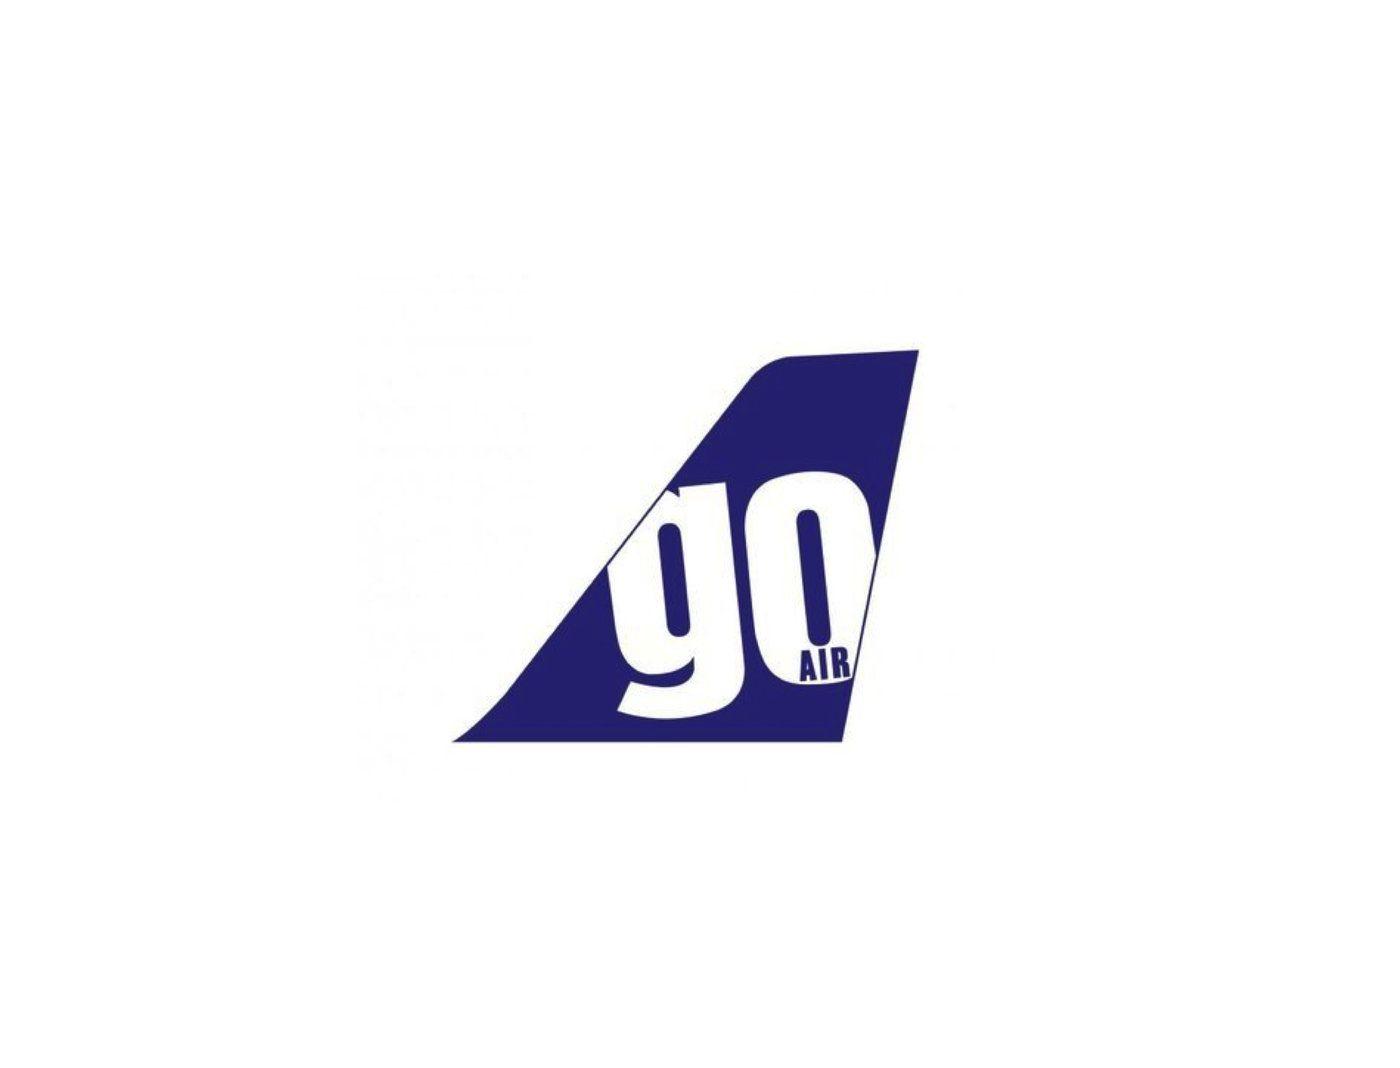 GoAir Logo - GoAir by Silent Partners at Coroflot.com